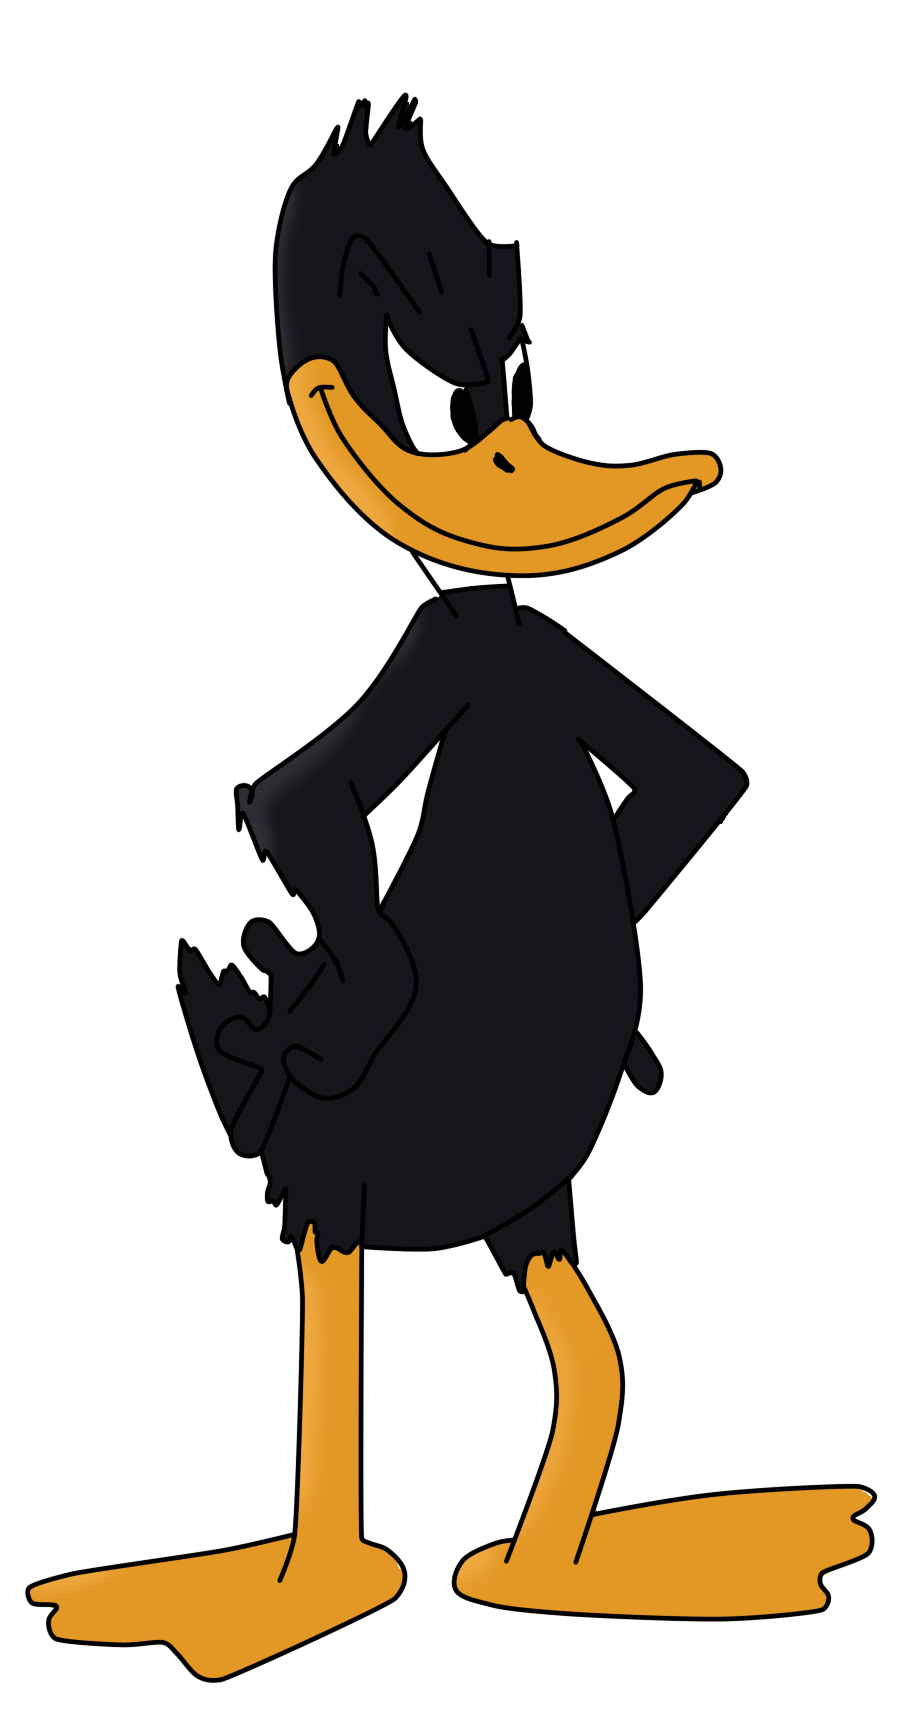 Daffy Duck [1978– ]